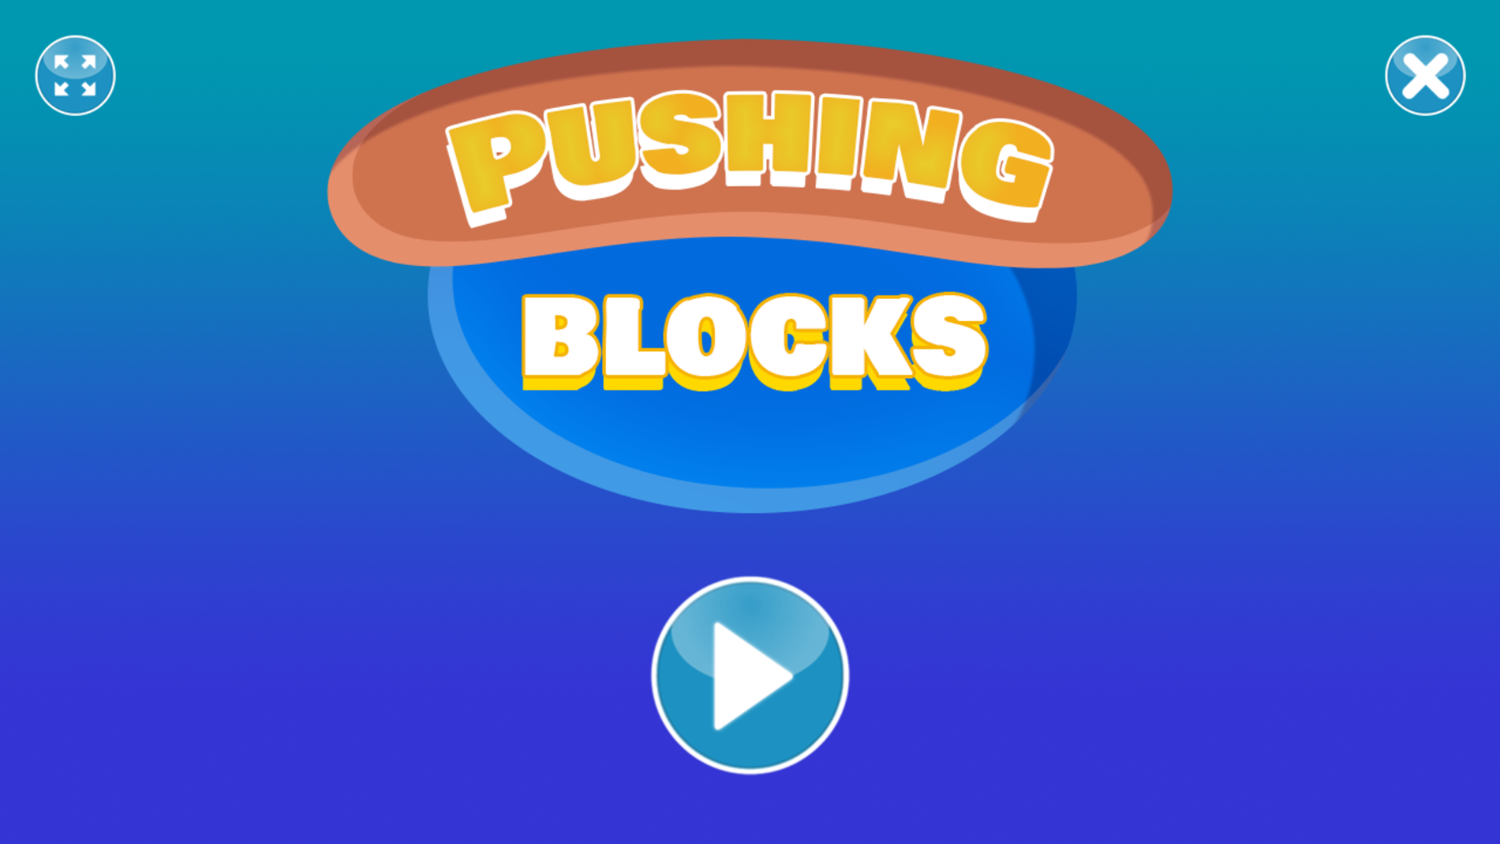 Pushing Blocks Game Welcome Screen Screenshot.